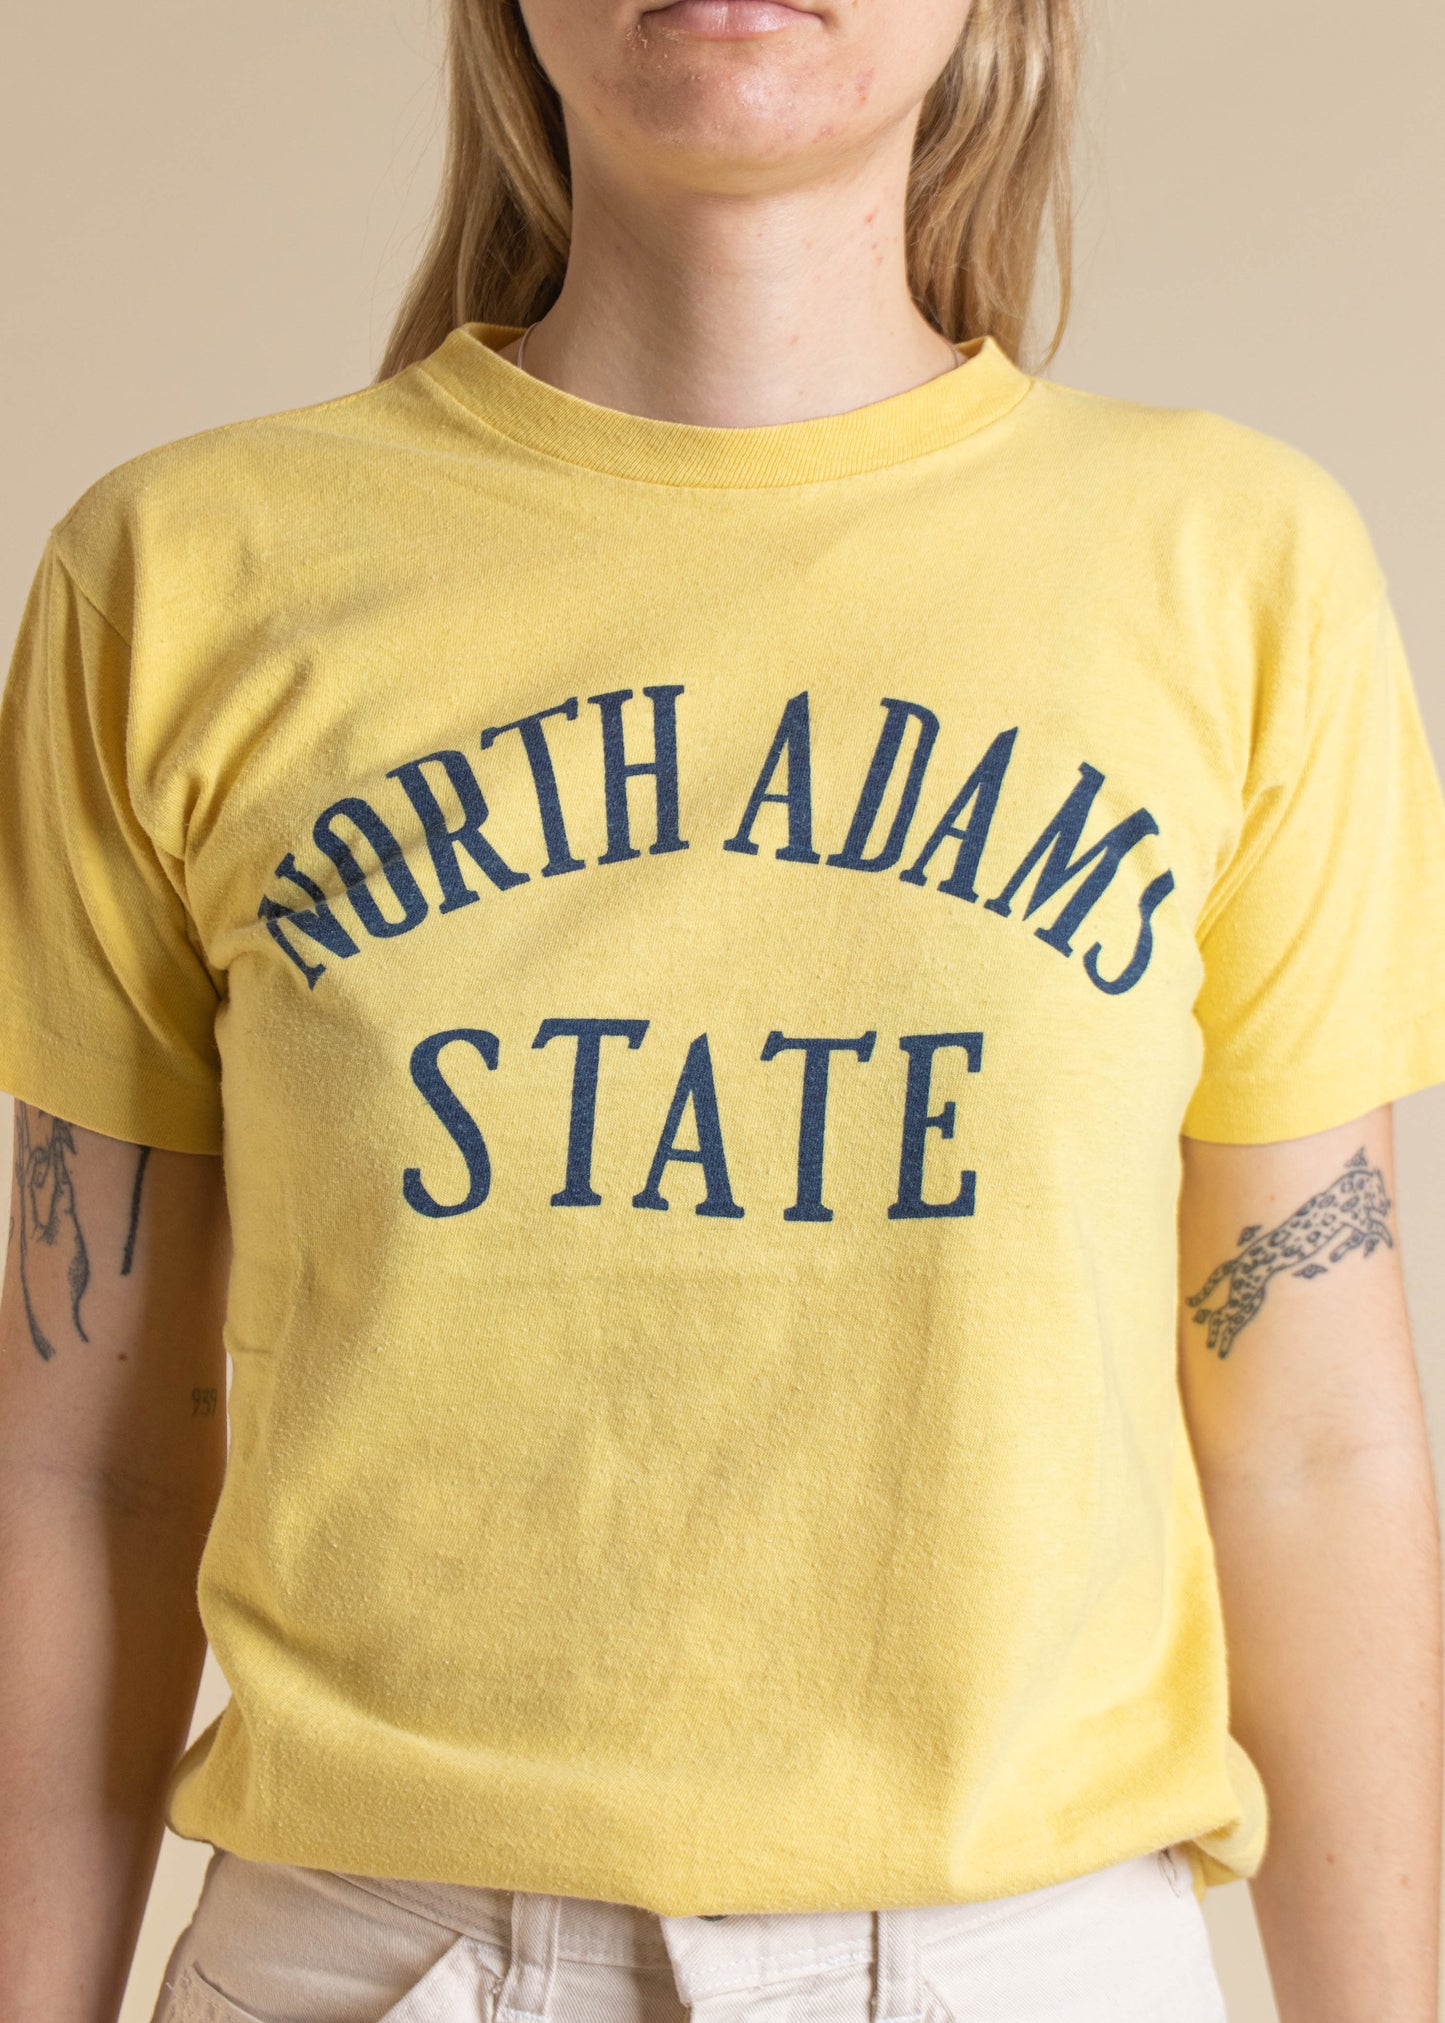 1970s Champion Blue Bar North Adams State Souvenir T-Shirt Size XS/S